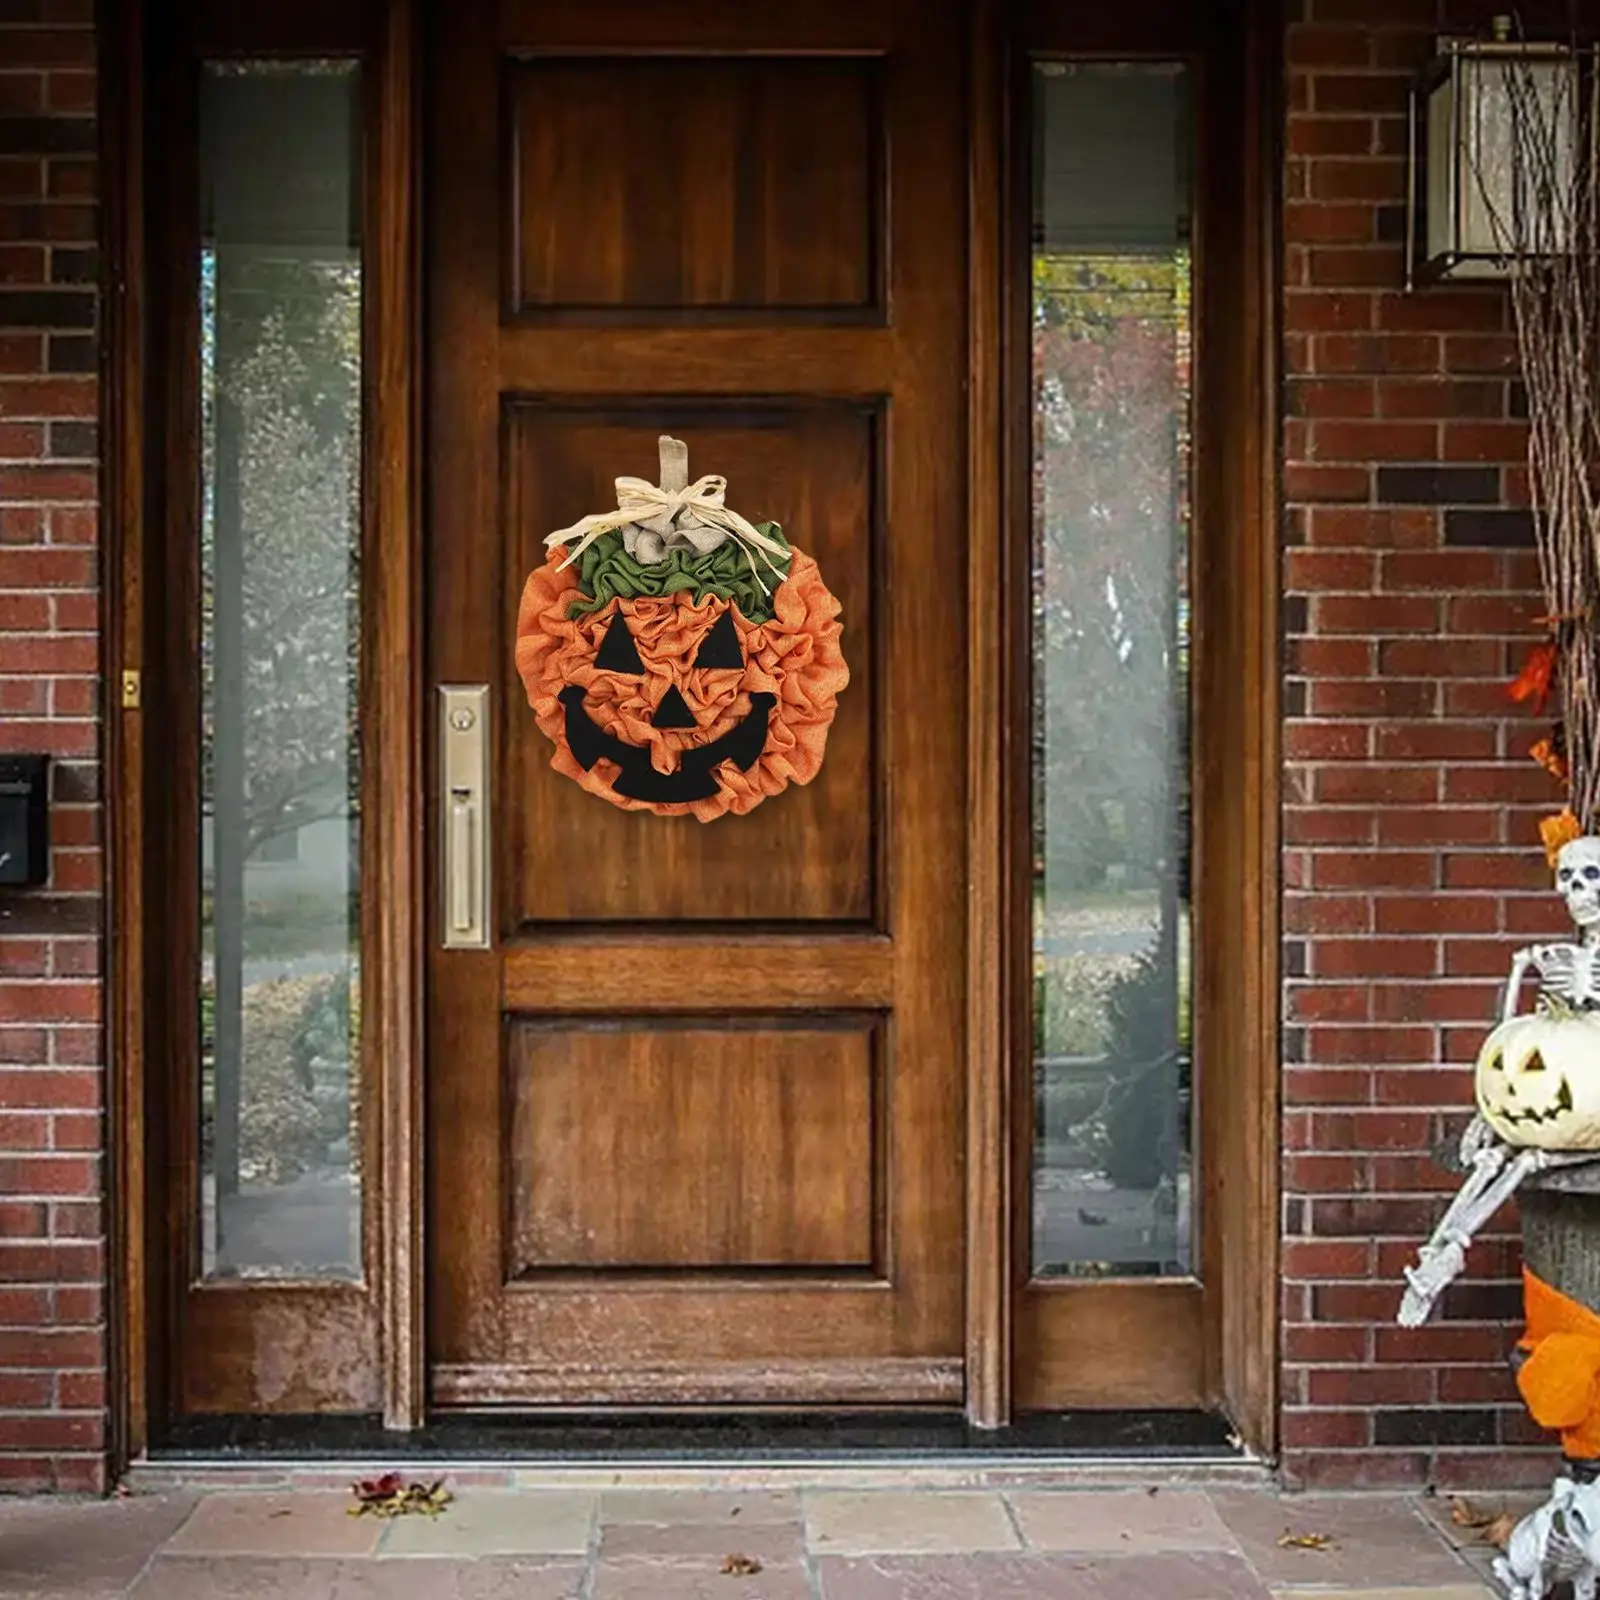 Halloween Pumpkin Door Hanging Wreath Decorations Sturdy Multipurpose Burlap Material 12inch for Autumn Harvest Thanksgiving